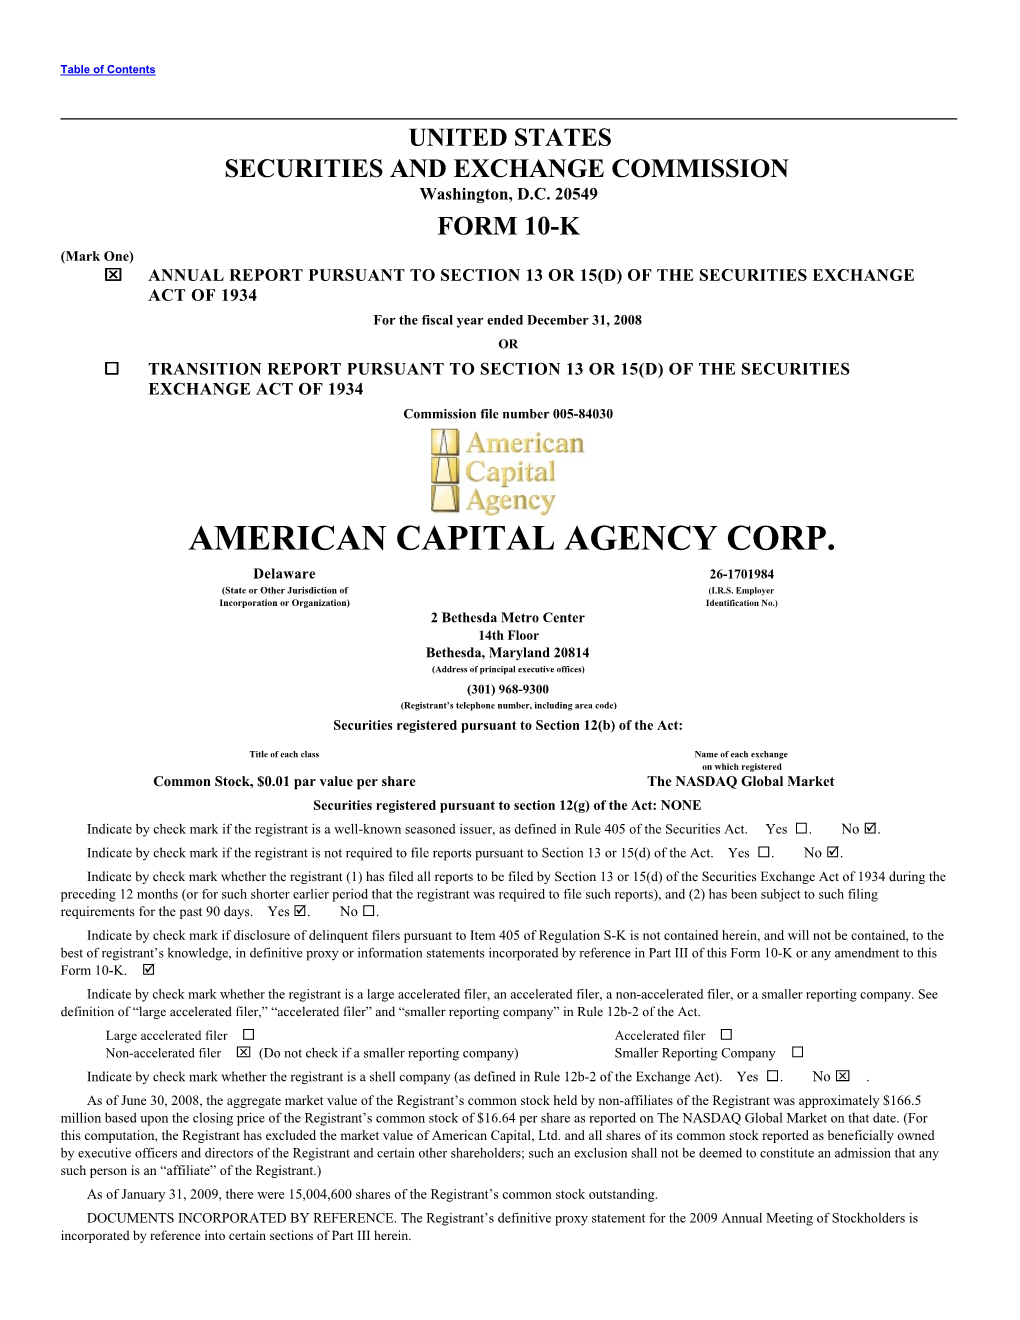 American Capital Agency Corp